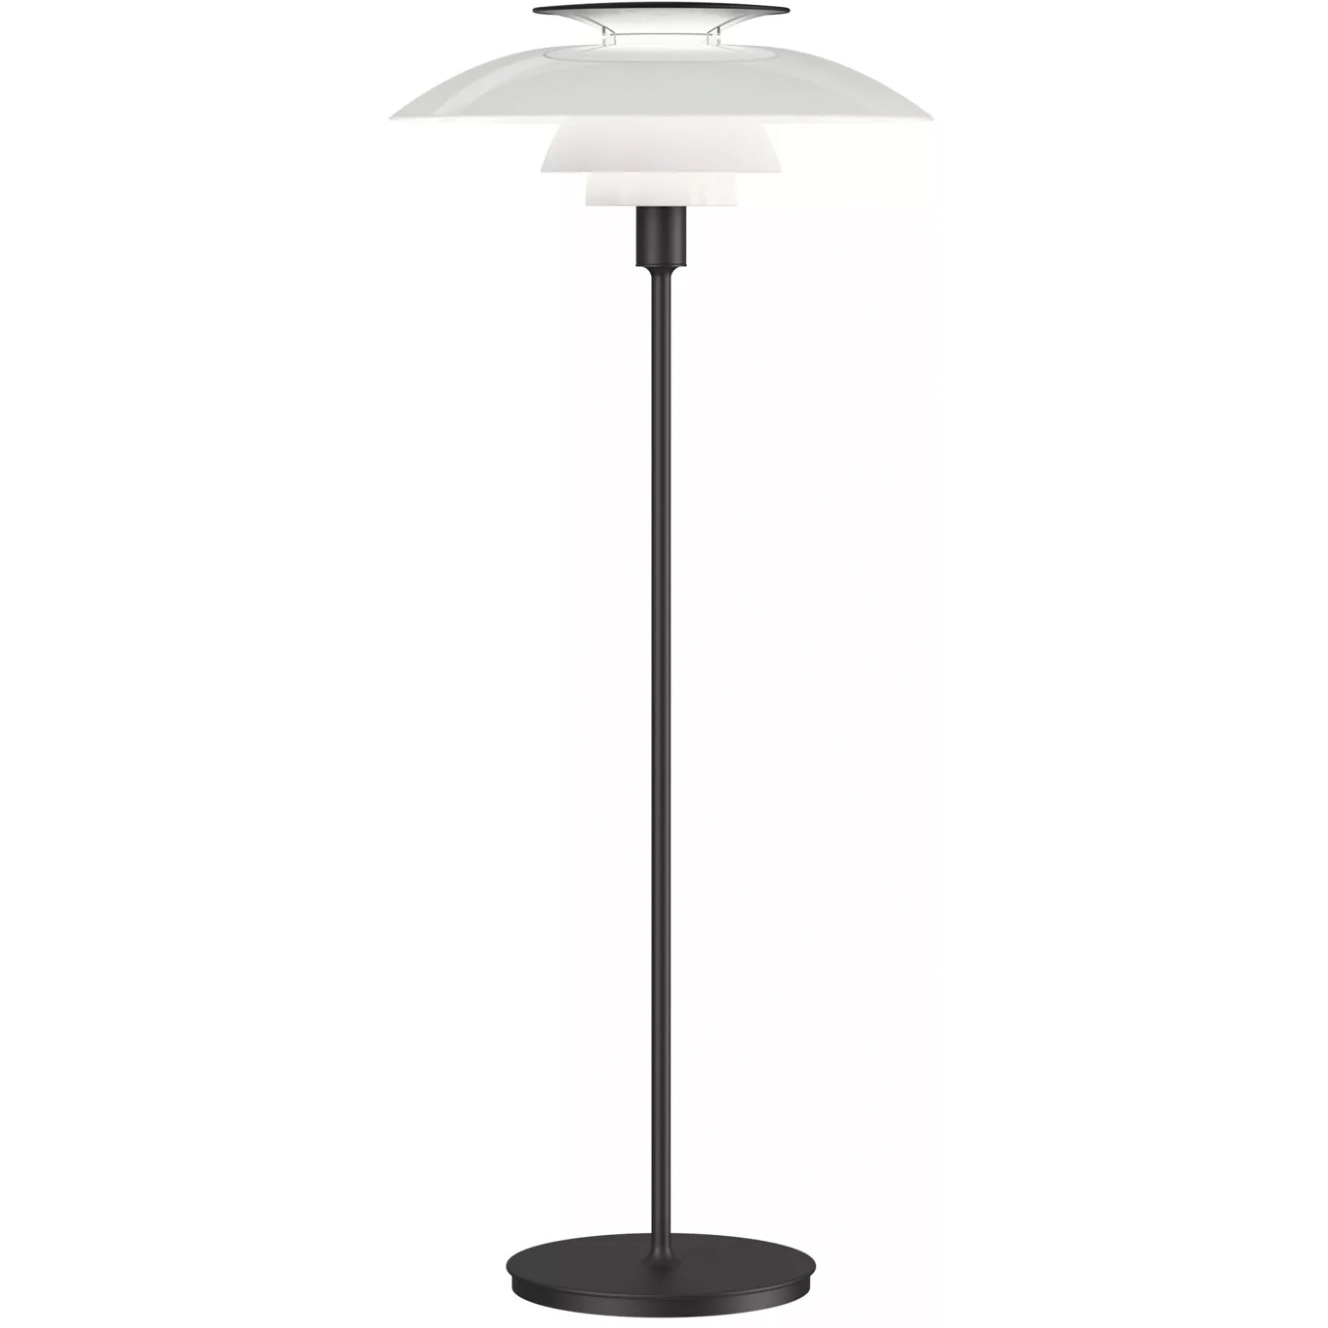 PH 80 Vloerlamp met Dimmer, Wit Opalen Acryl / Zwart